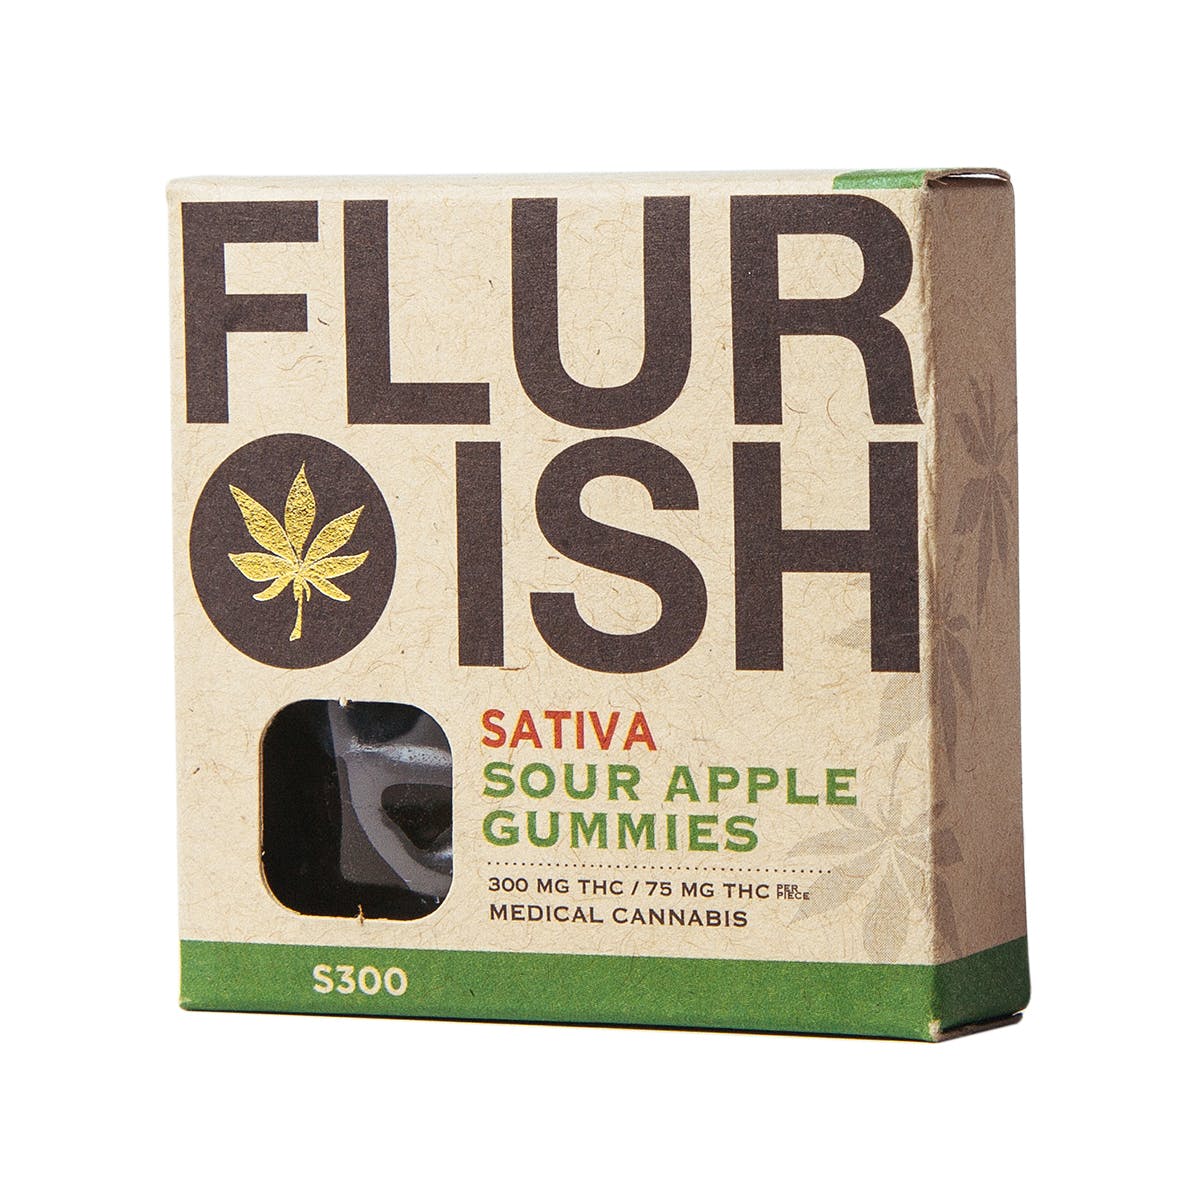 marijuana-dispensaries-supreme-purity-in-costa-mesa-sour-apple-gummies-2c-sativa-300mg